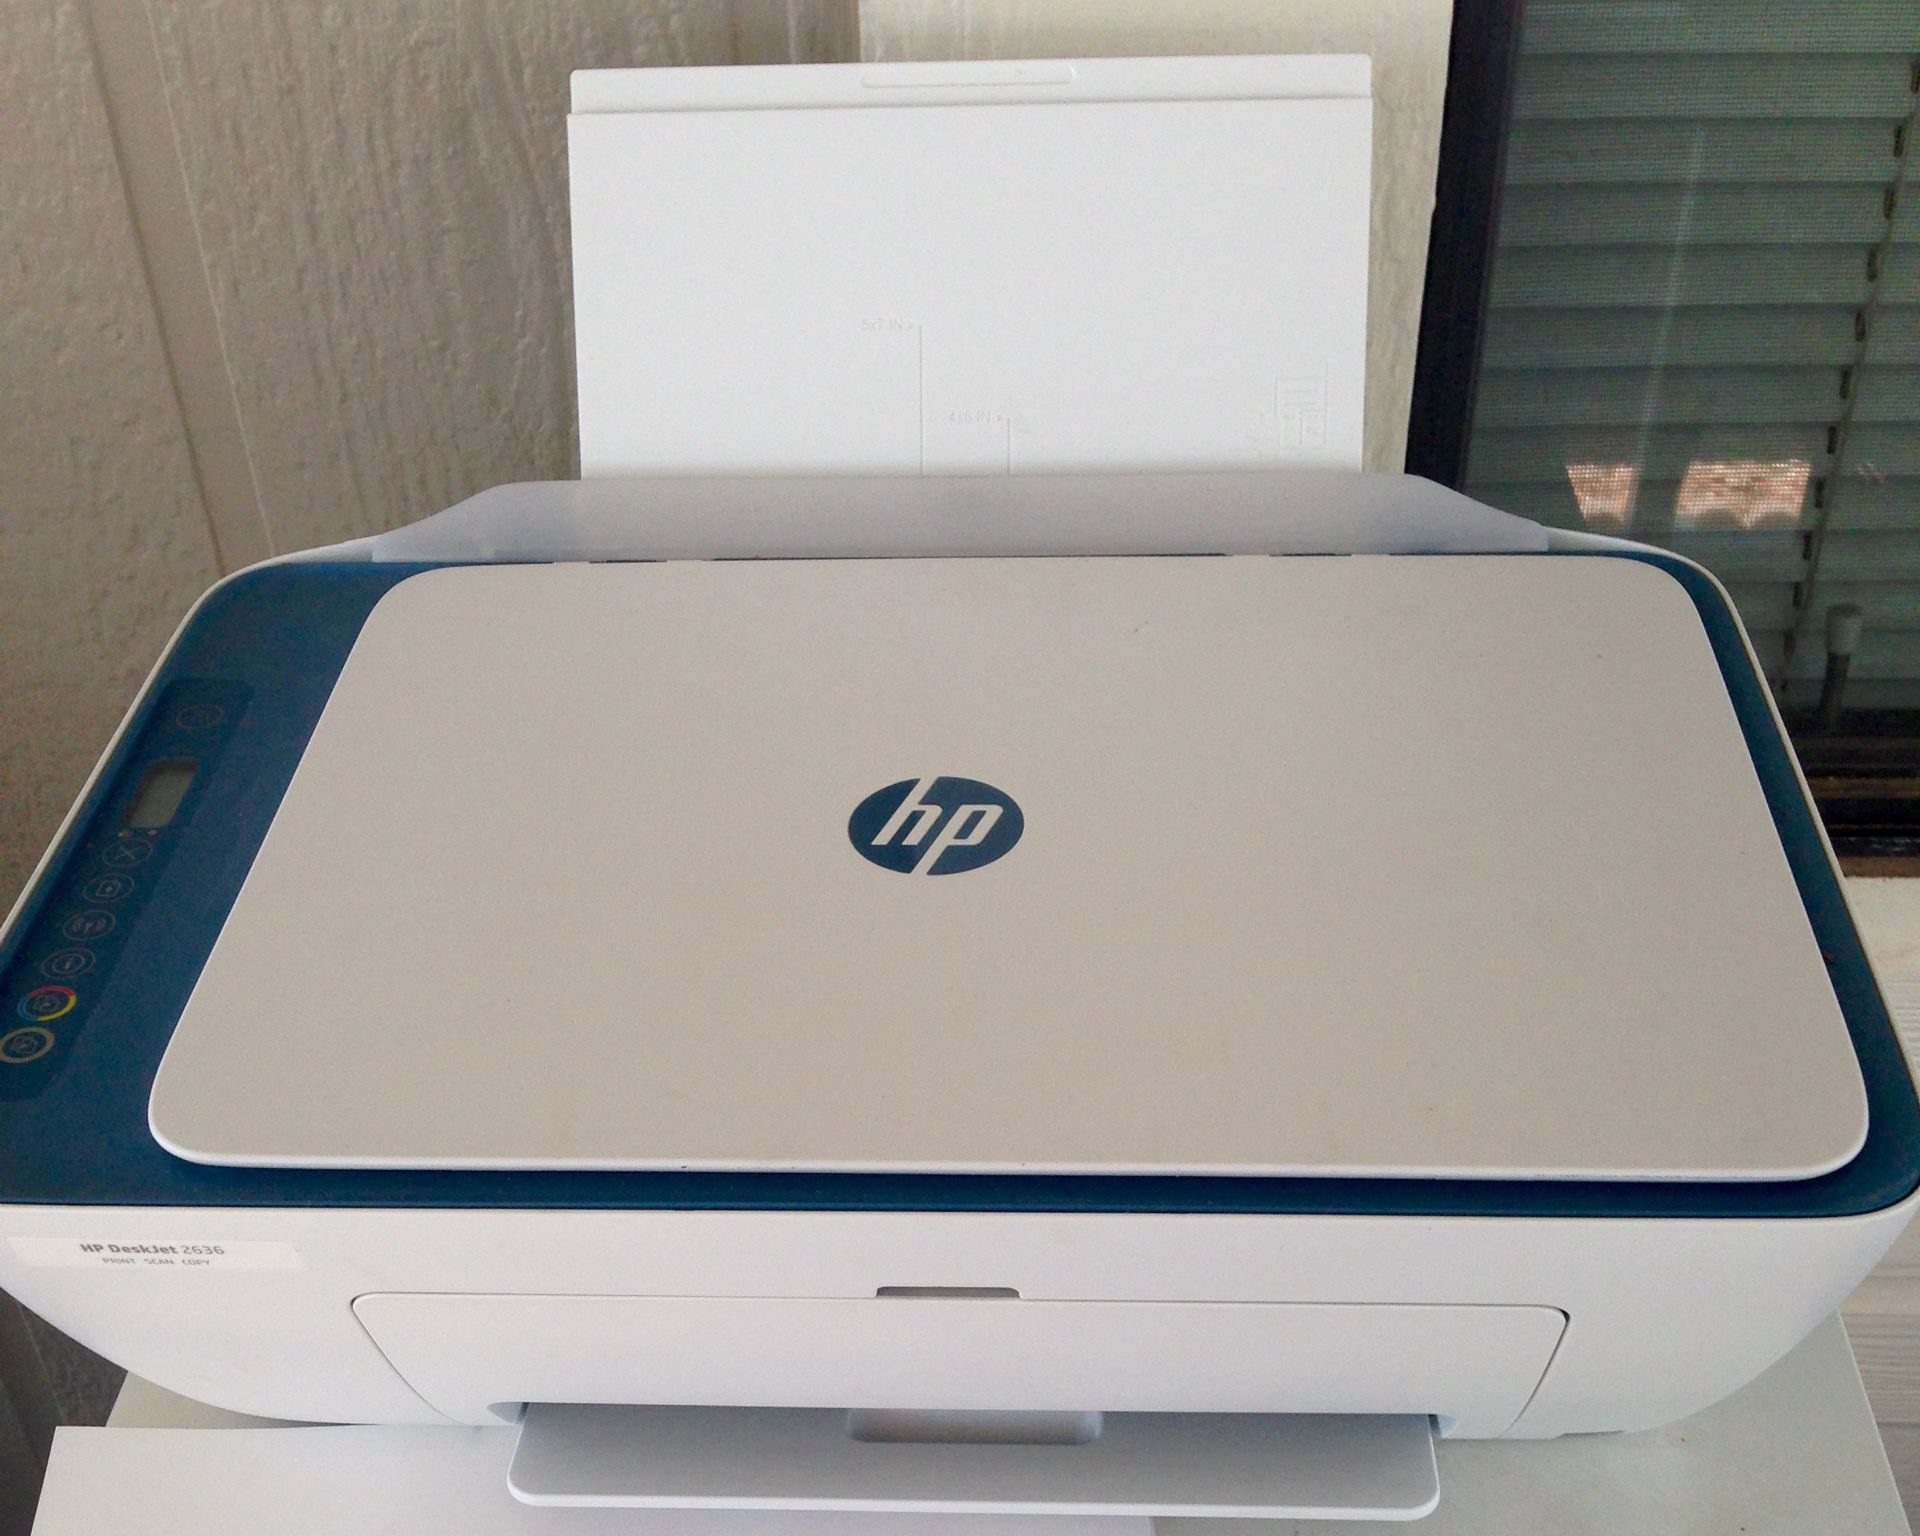 Newer HP Printer